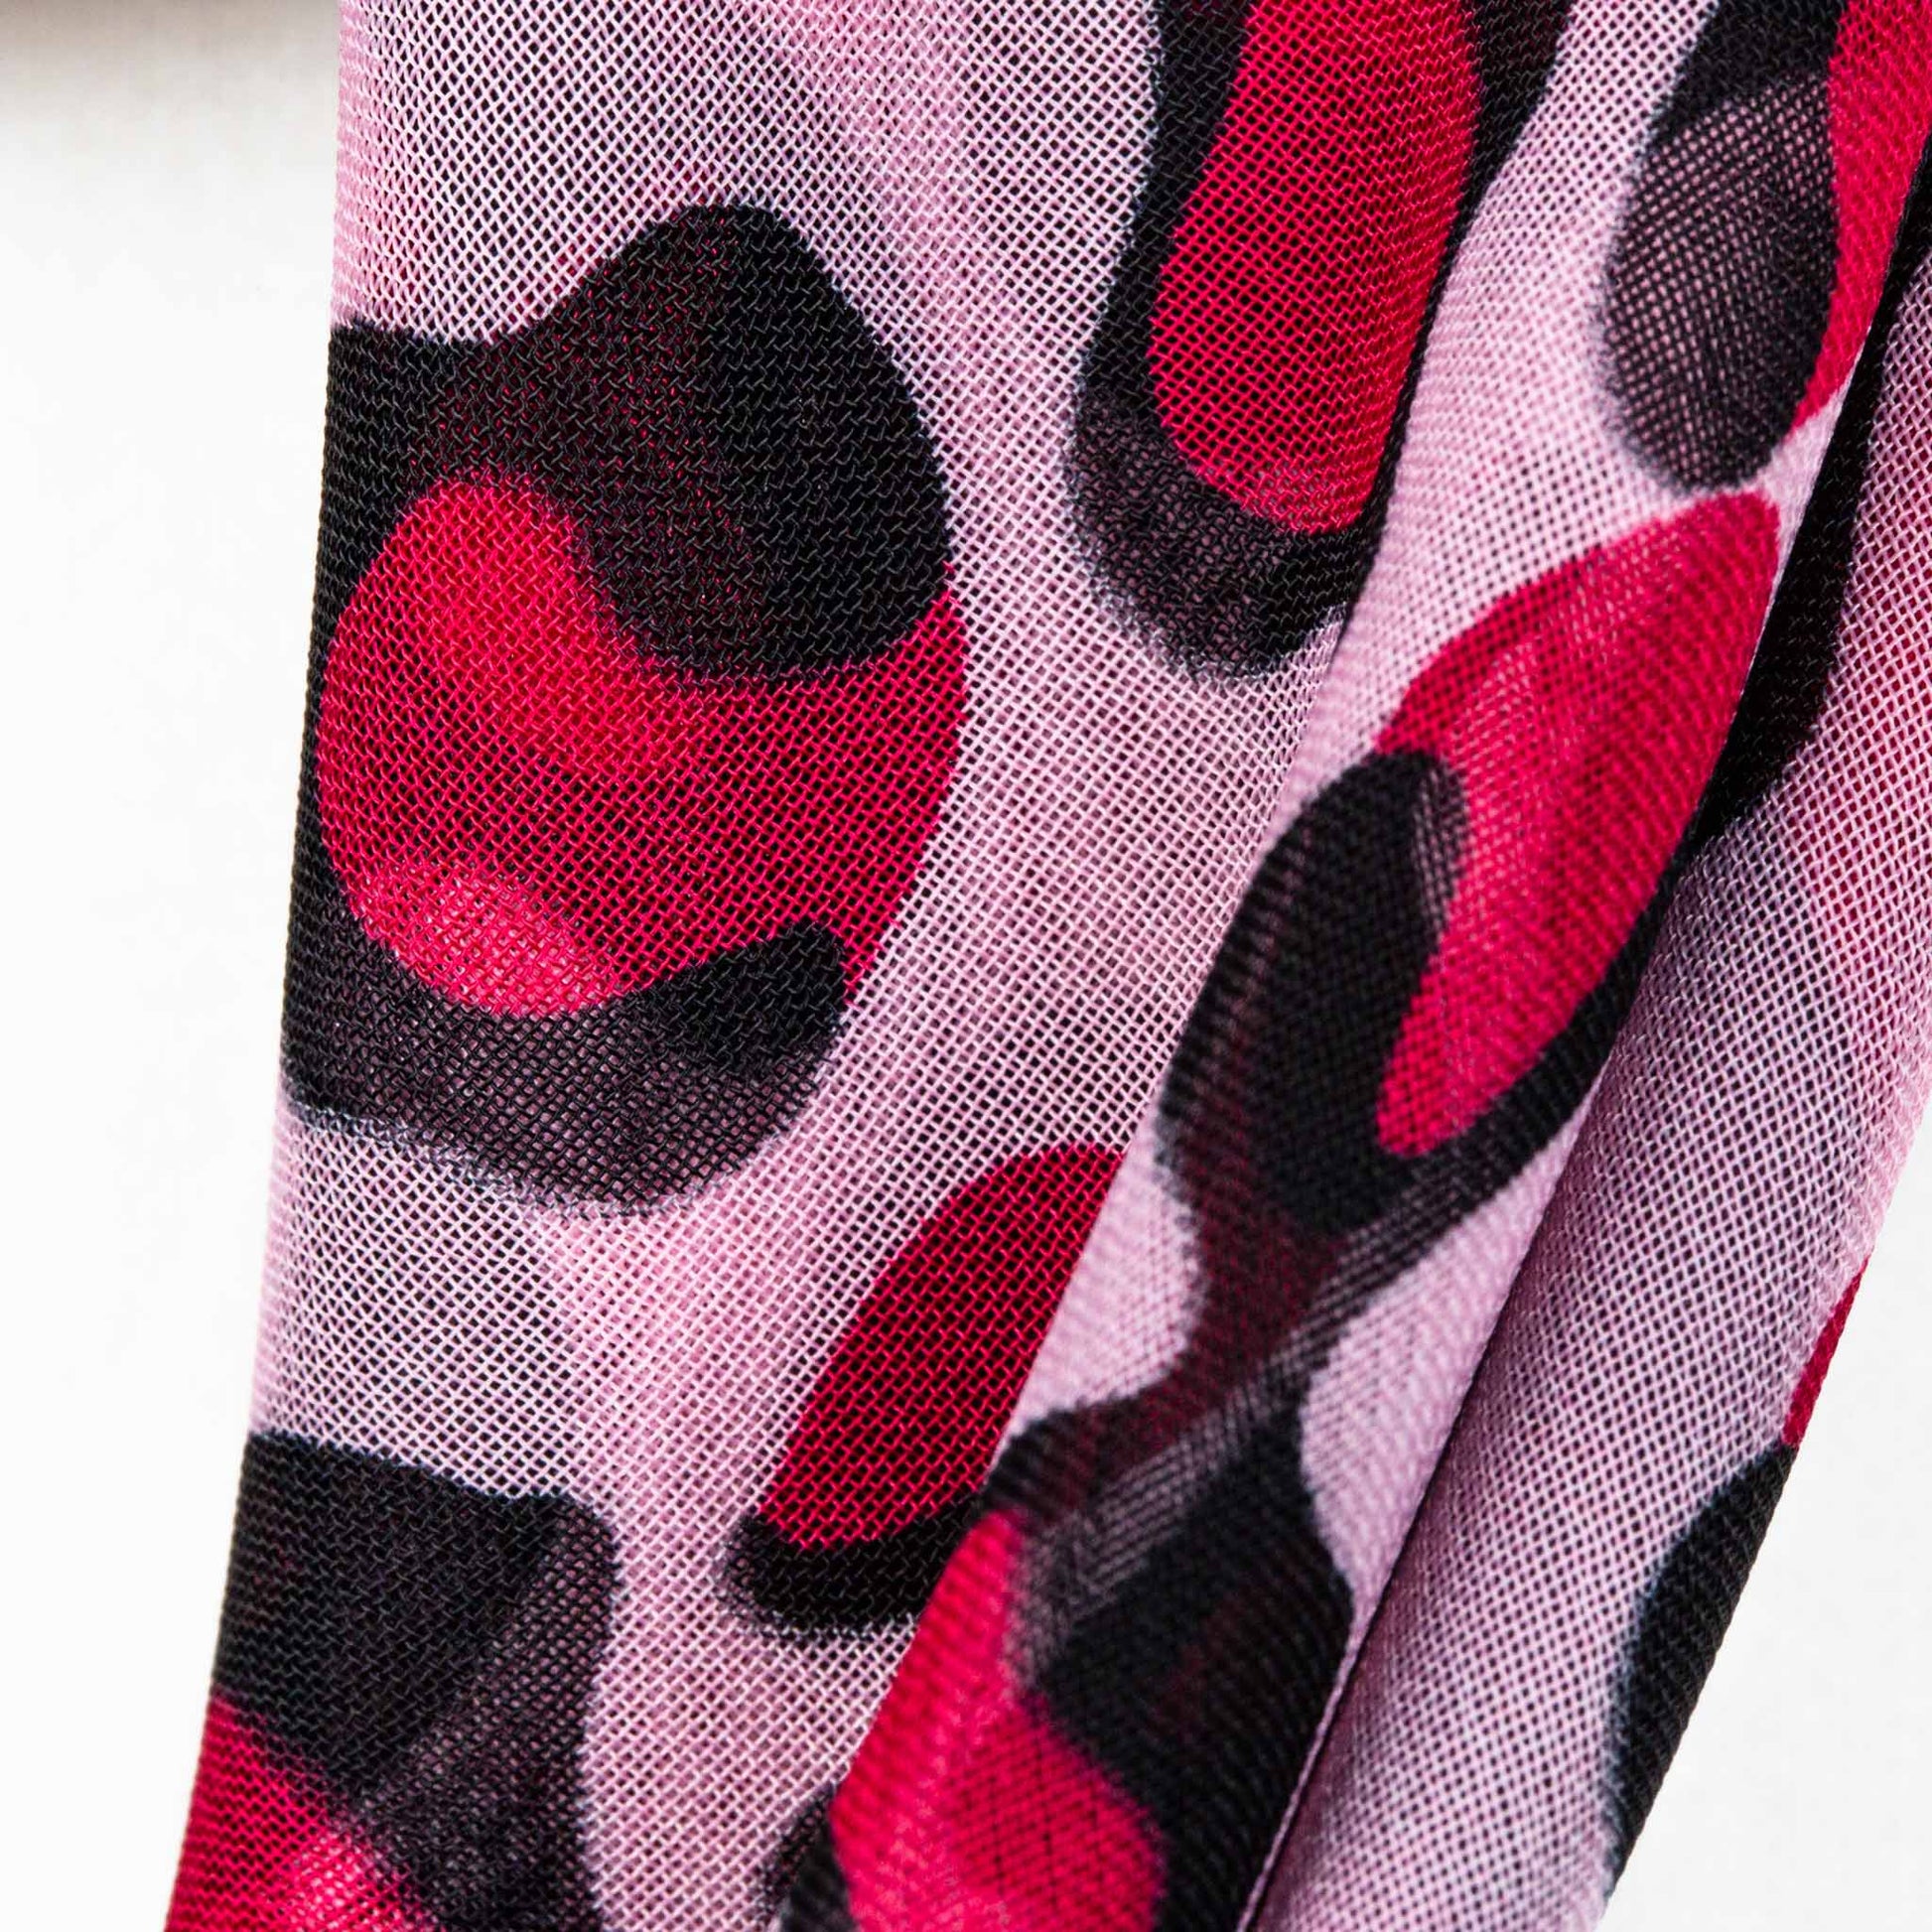 Eșarfă damă din mătase cu animal print și dungi, 65 x 65 cm - Roz